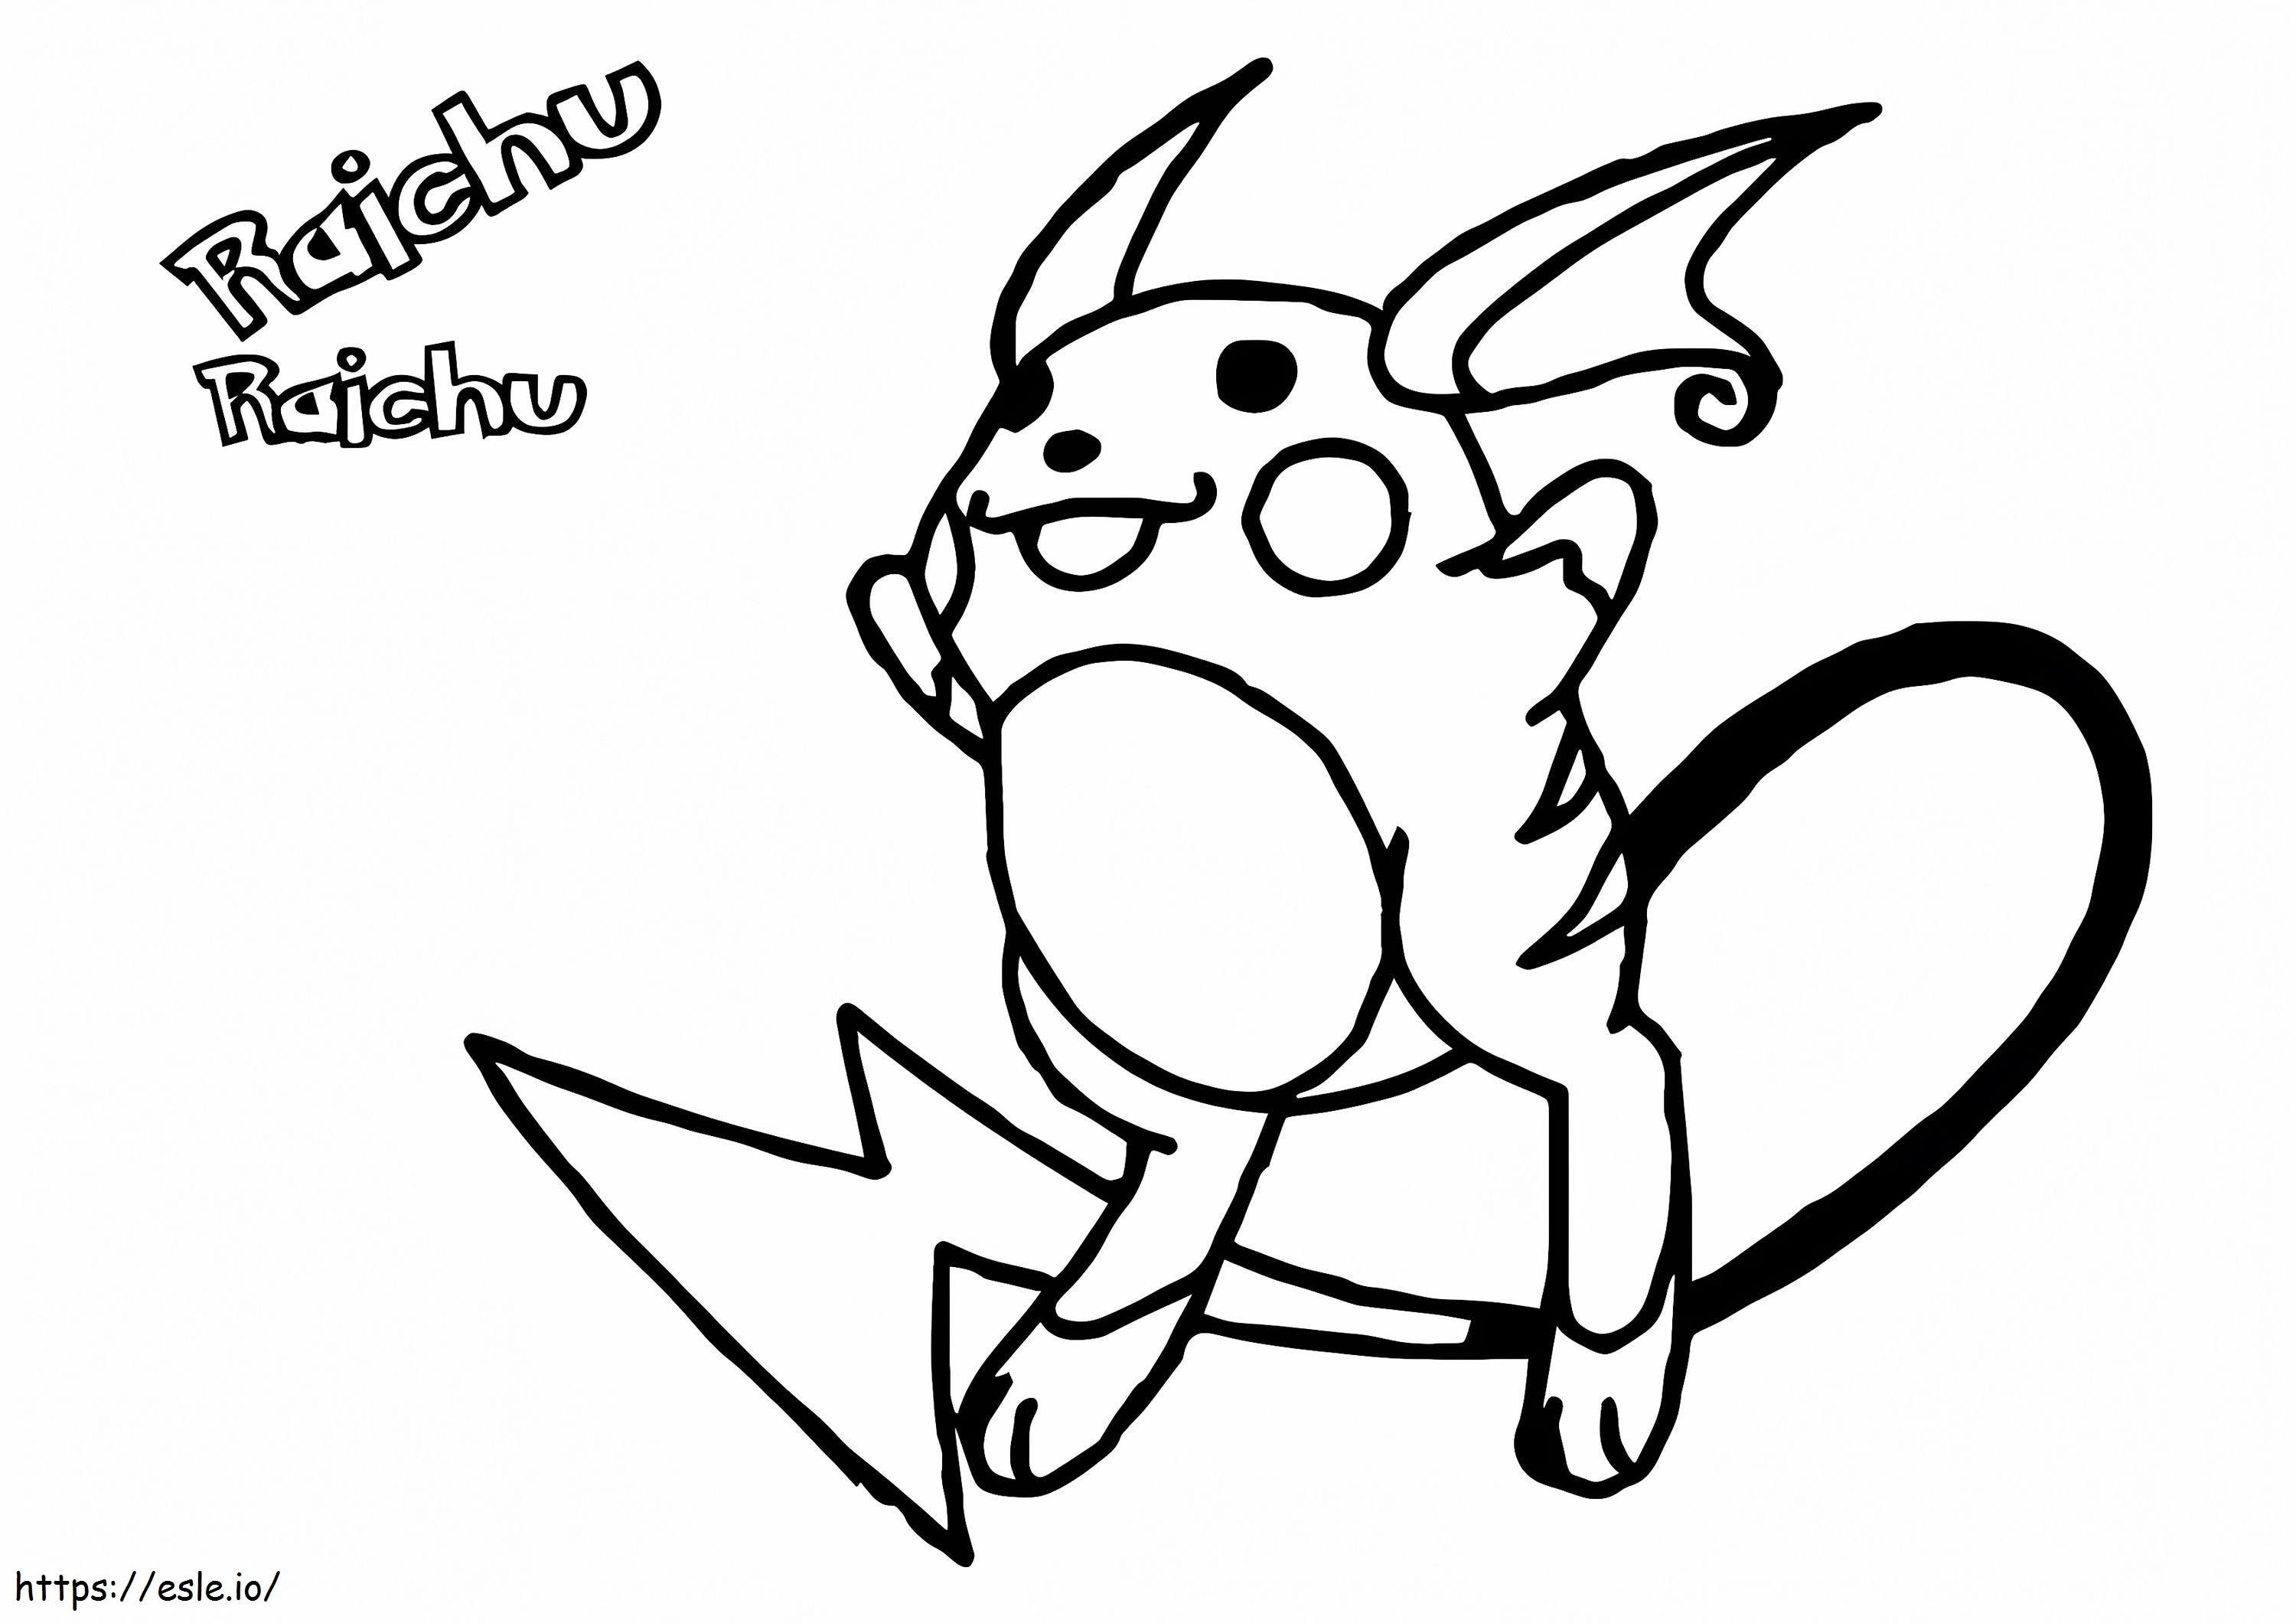 Coloriage Raichu de Pokémon E1600670660769 à imprimer dessin